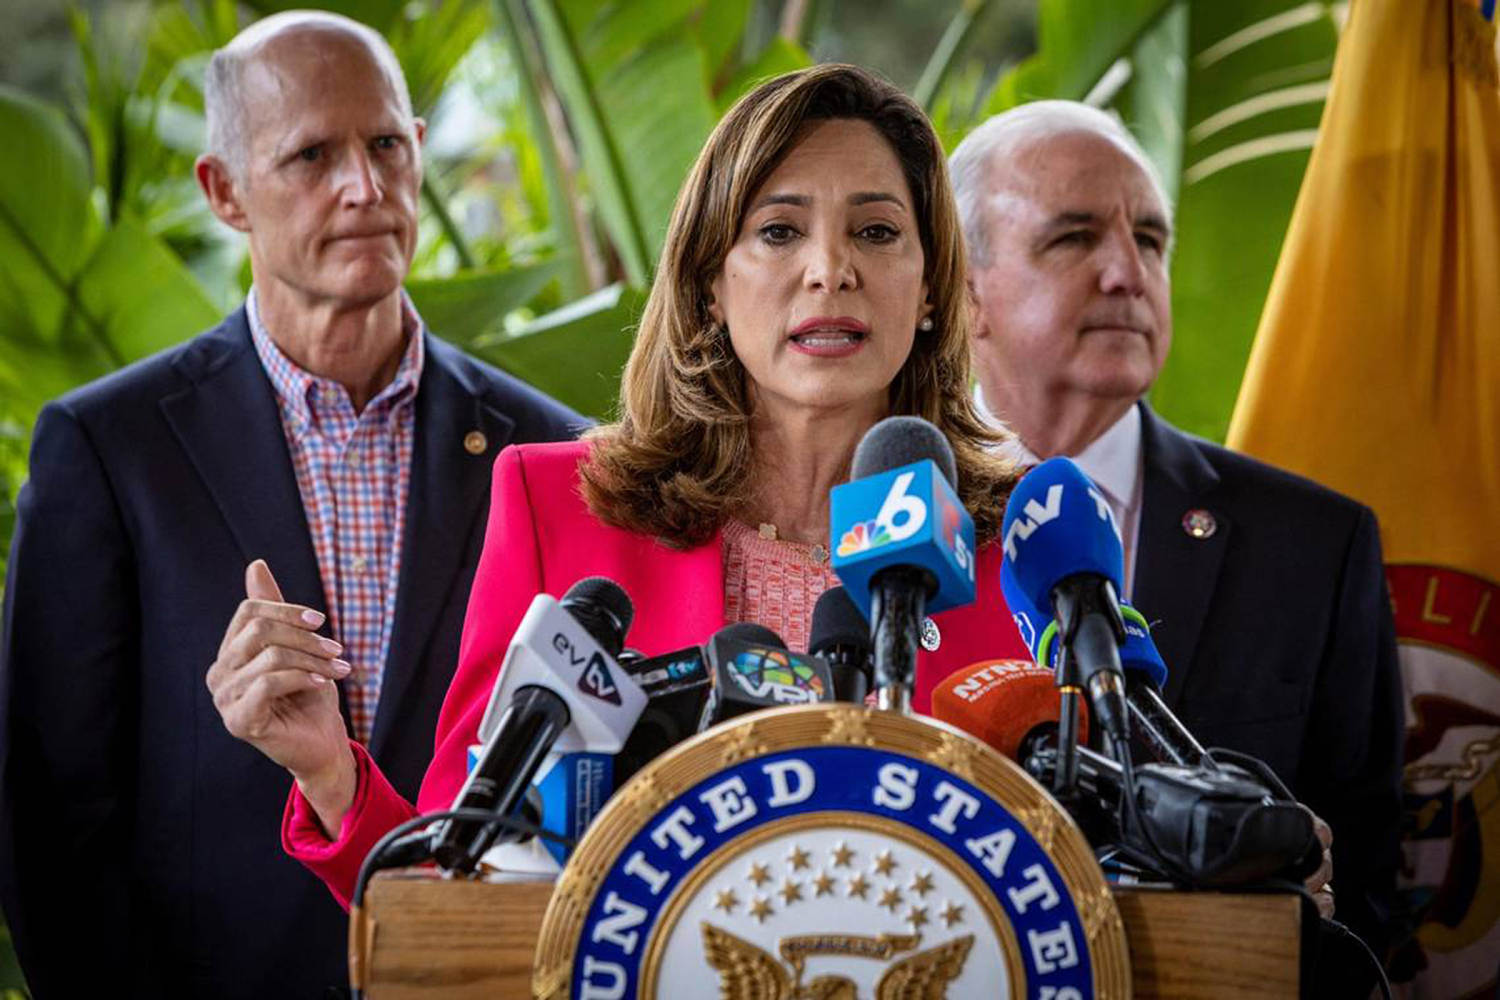 republican rep. salazar blocks democrat from hearing over her views on cuba.